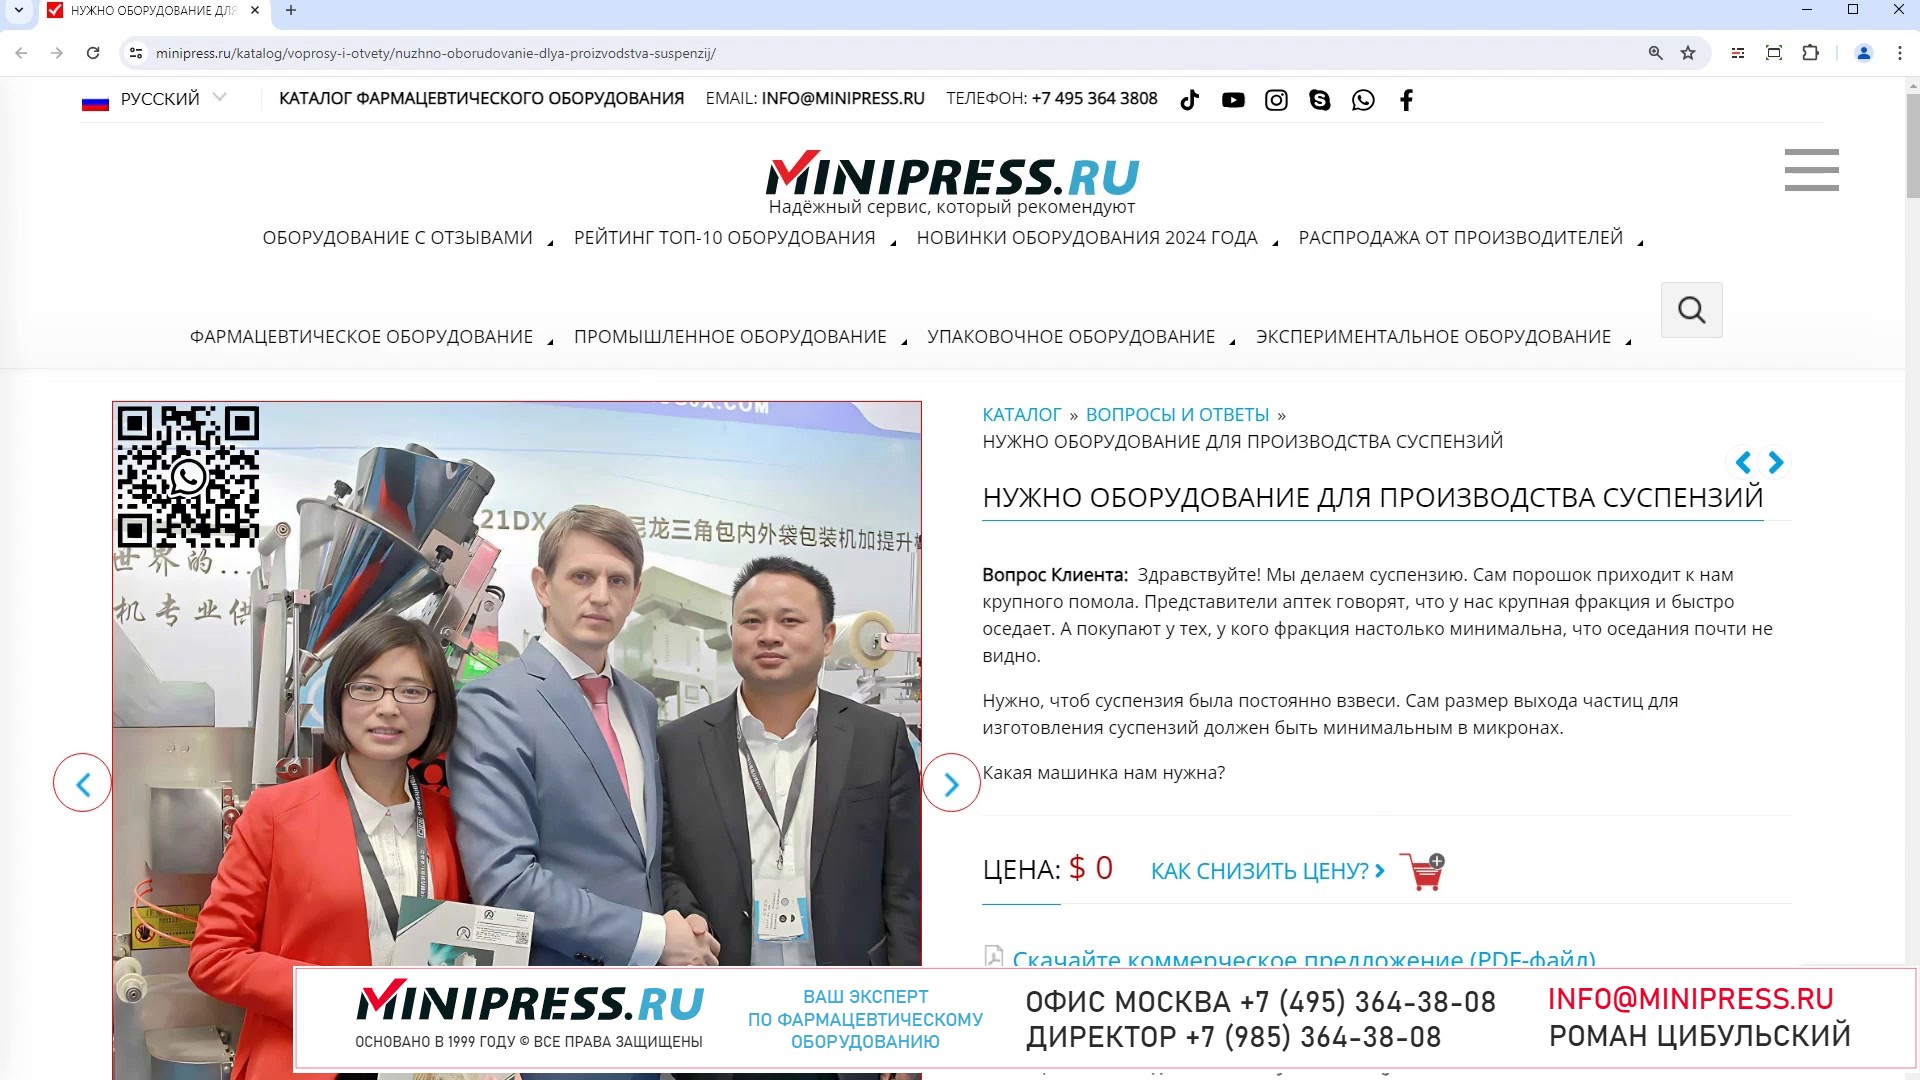 Minipress.ru Нужно оборудование для производства суспензий